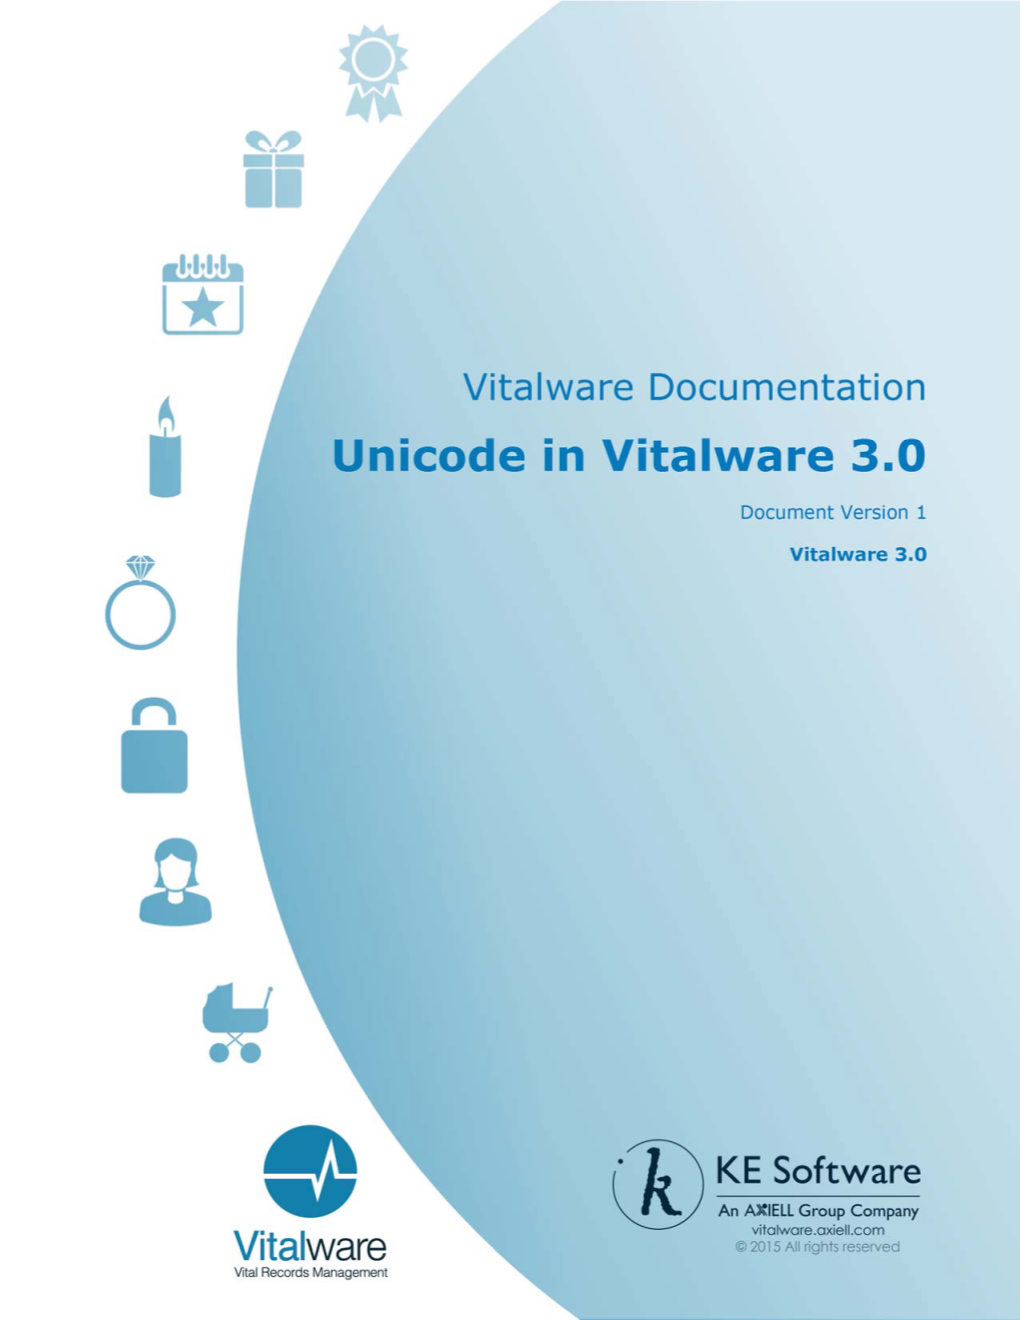 Unicode in Vitalware 3.0